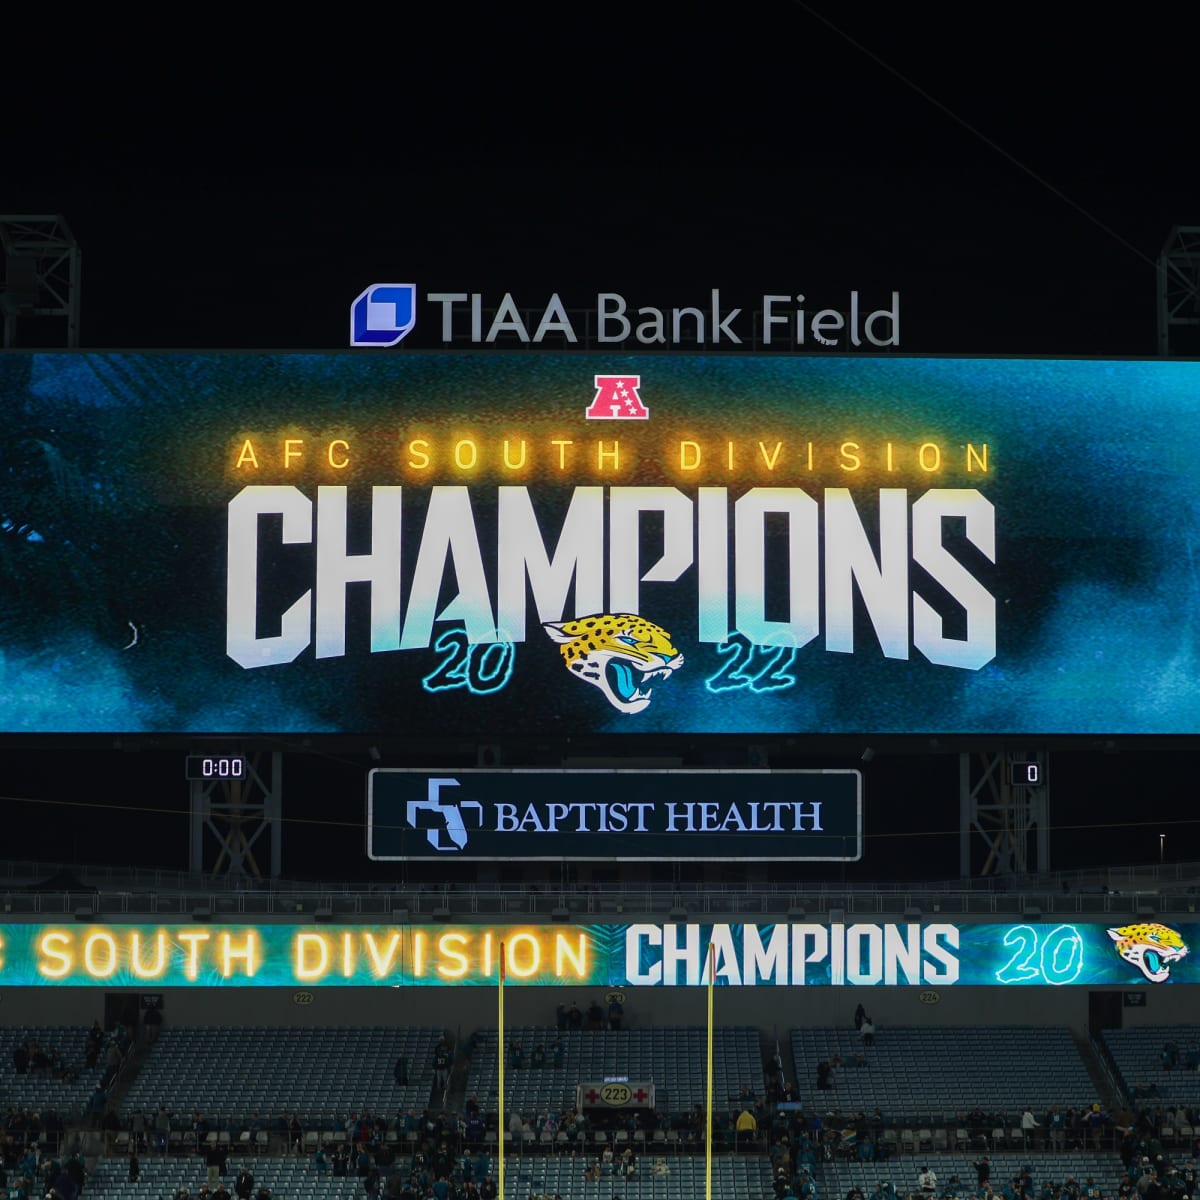 Jacksonville Jaguars win the 2017 AFC South division title - Big